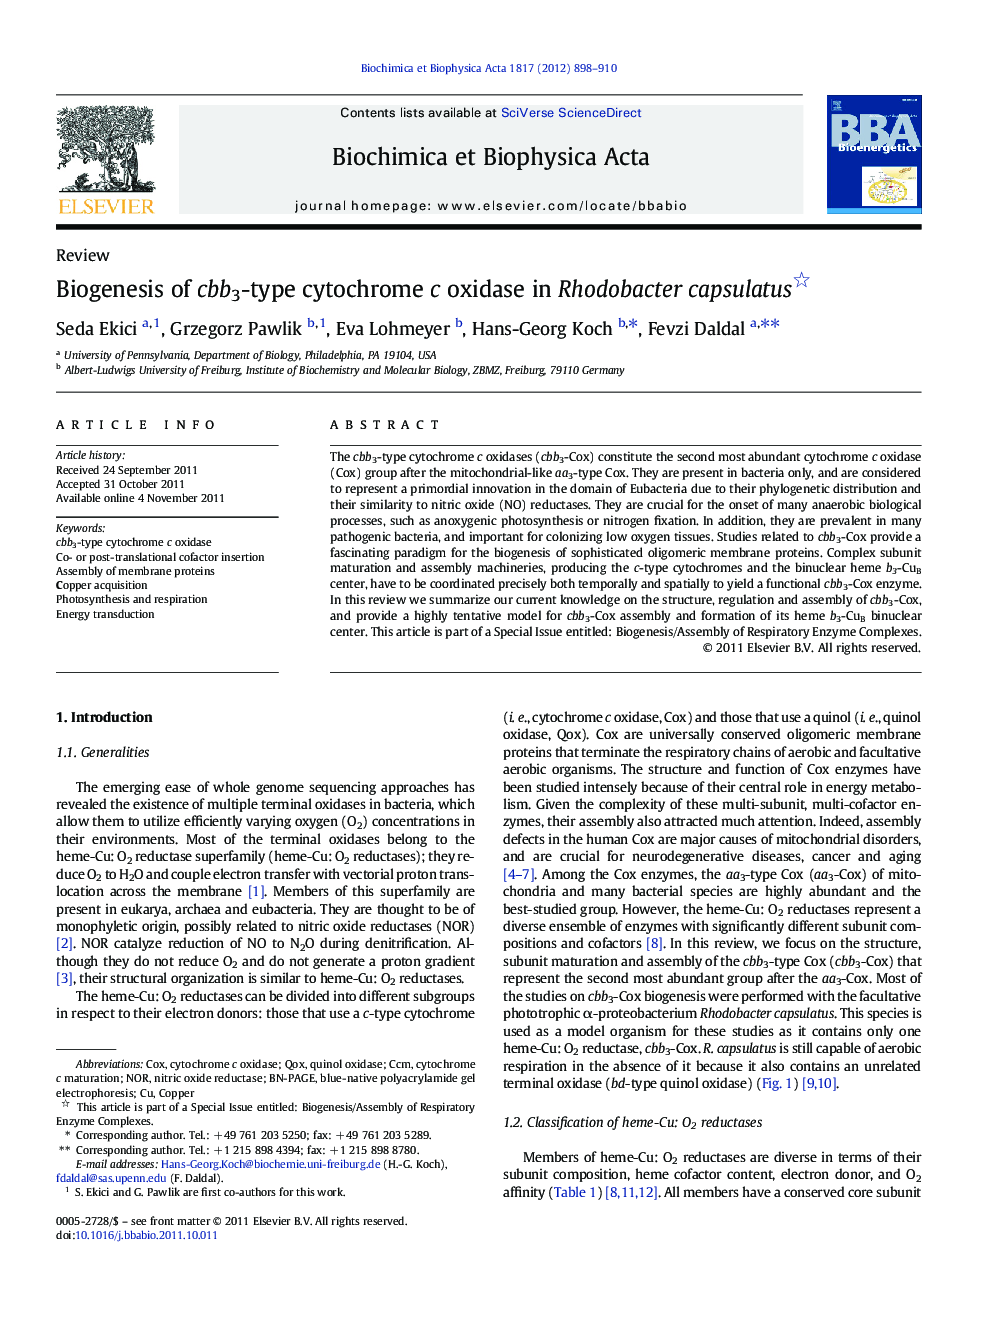 Biogenesis of cbb3-type cytochrome c oxidase in Rhodobacter capsulatus 